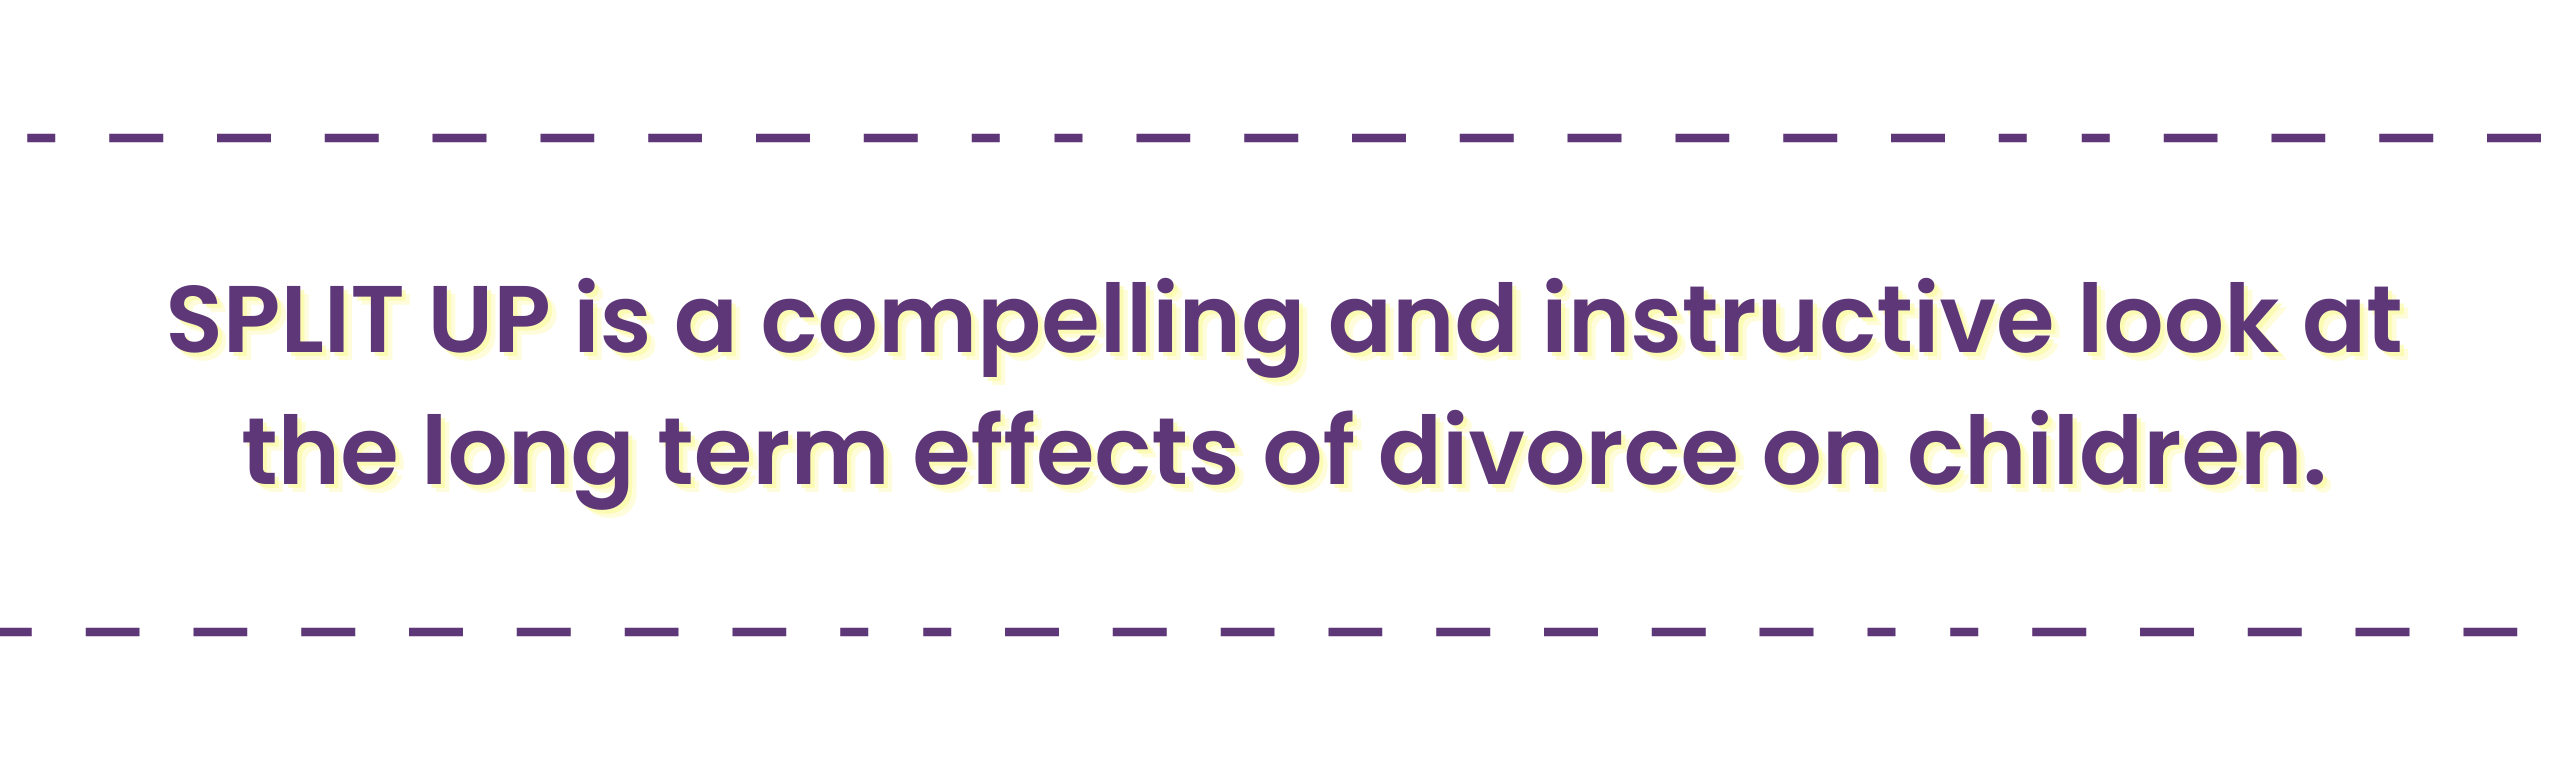 split up trainings for divorce professionals